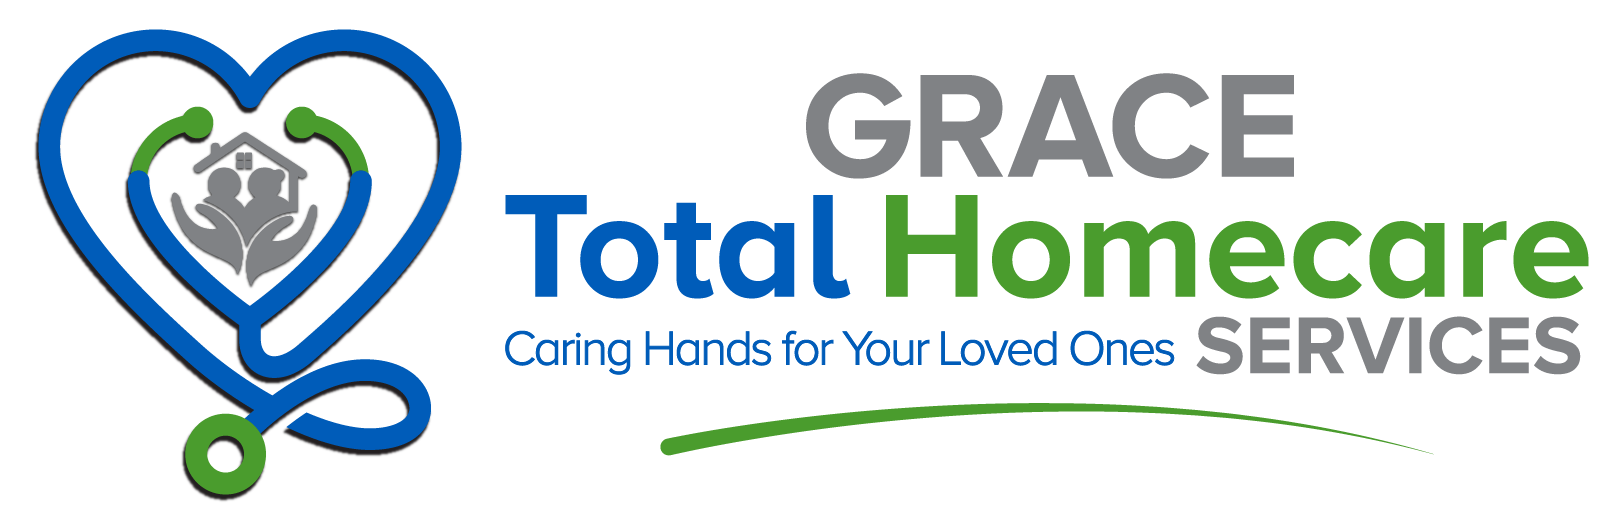 Grace Total Homecare